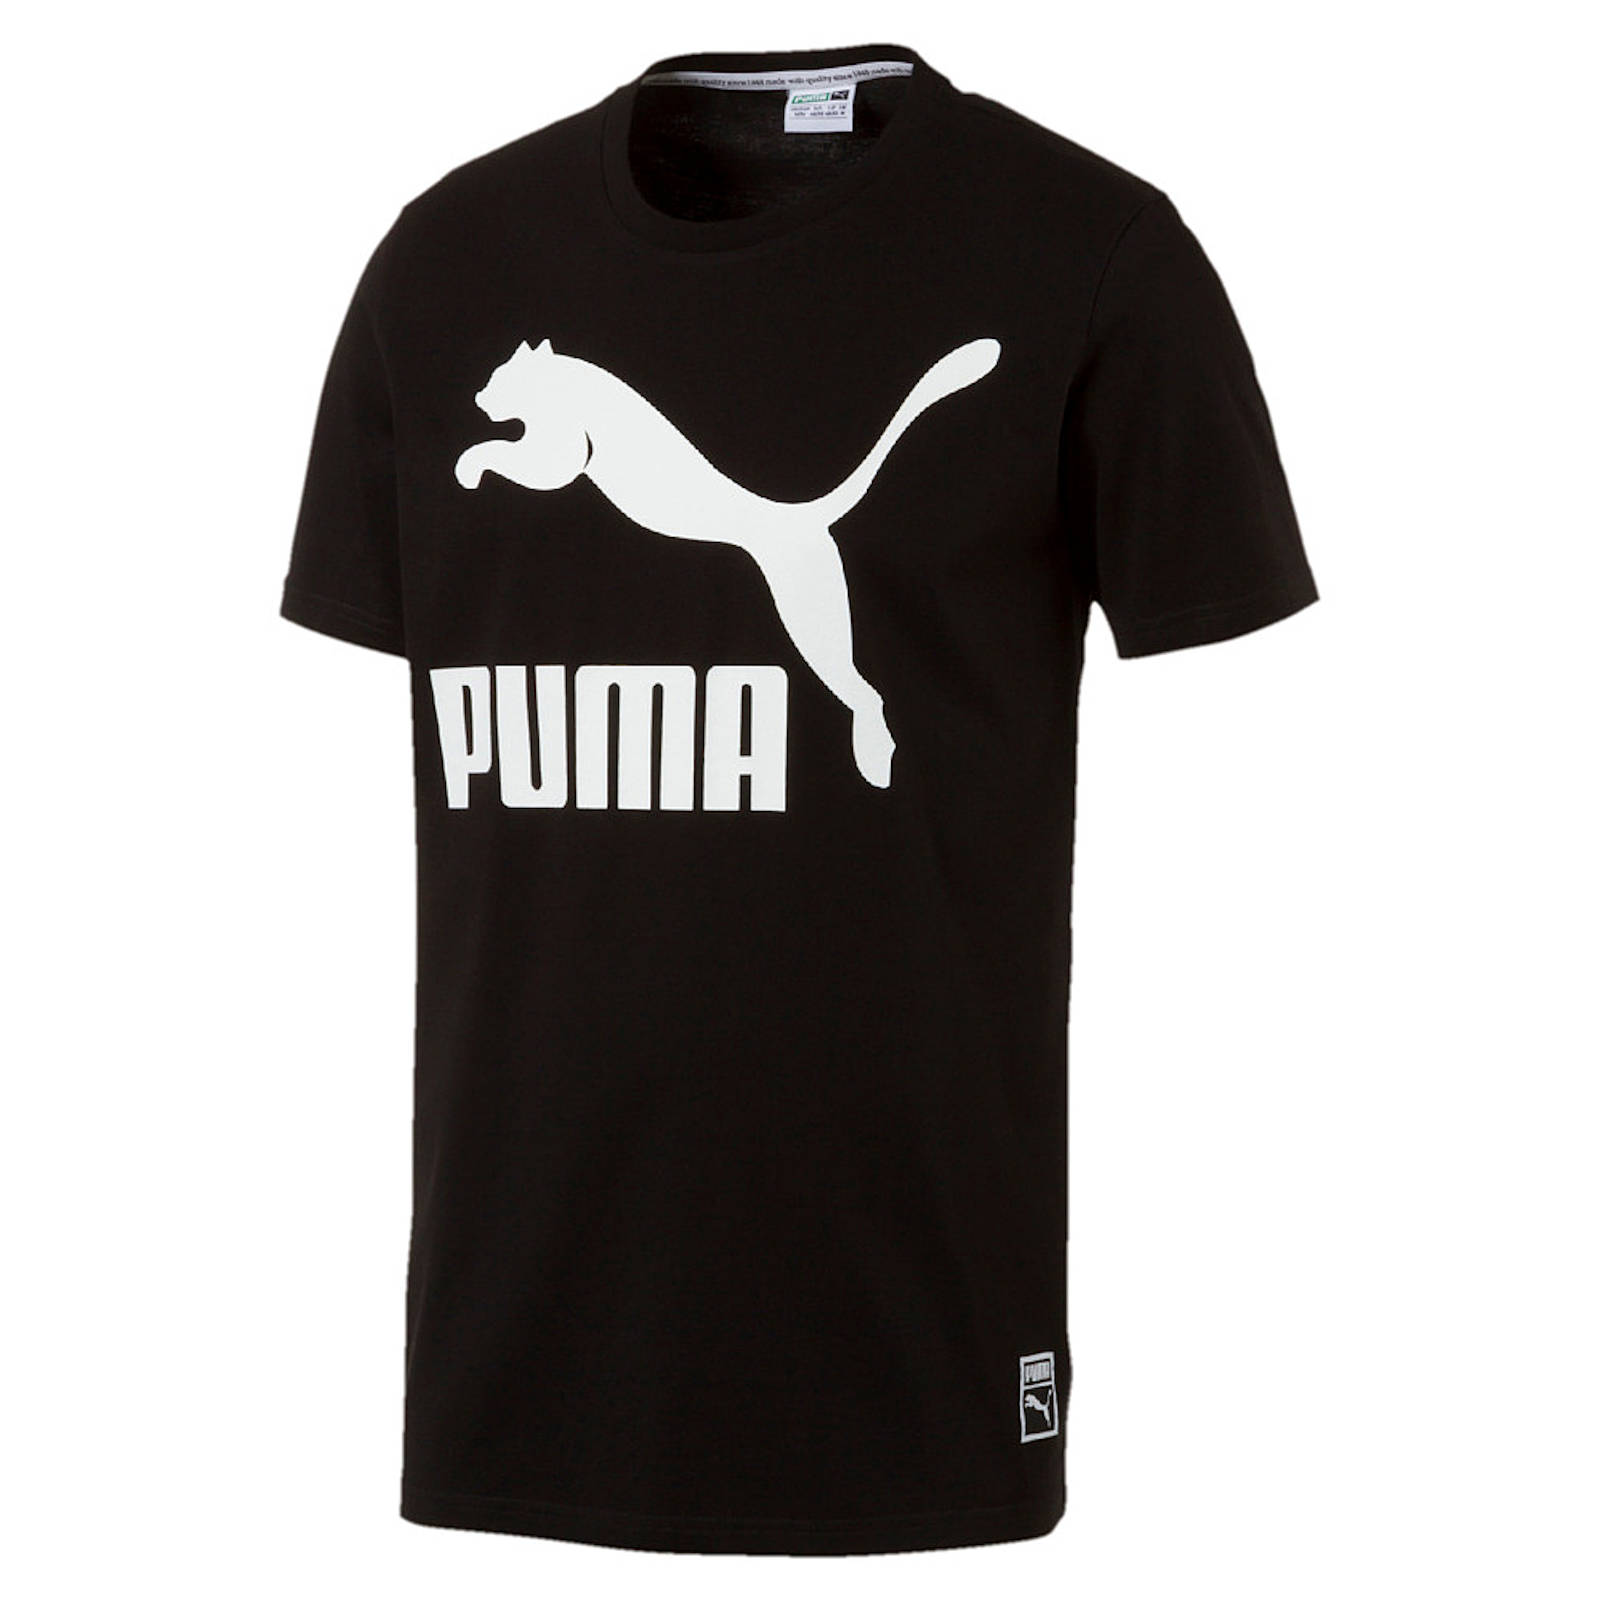 Puma T-shirts Print Archives Logo Tee 572392 | eBay